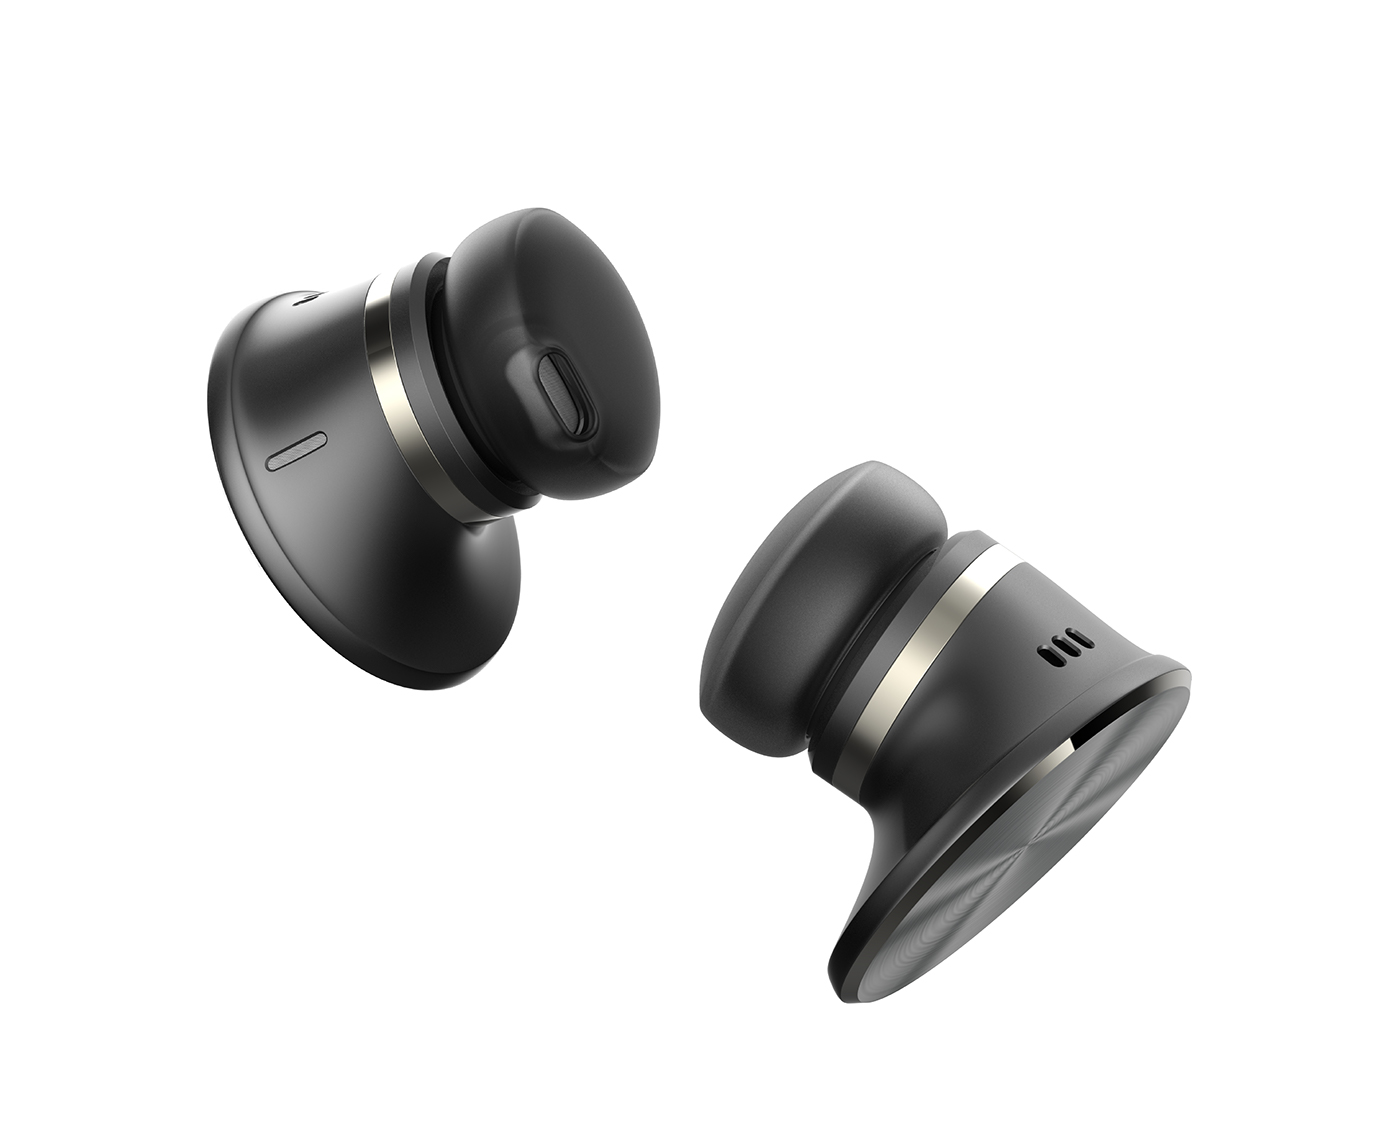 headphone earphone speaker cradle sound minkyo concept module Samsung music